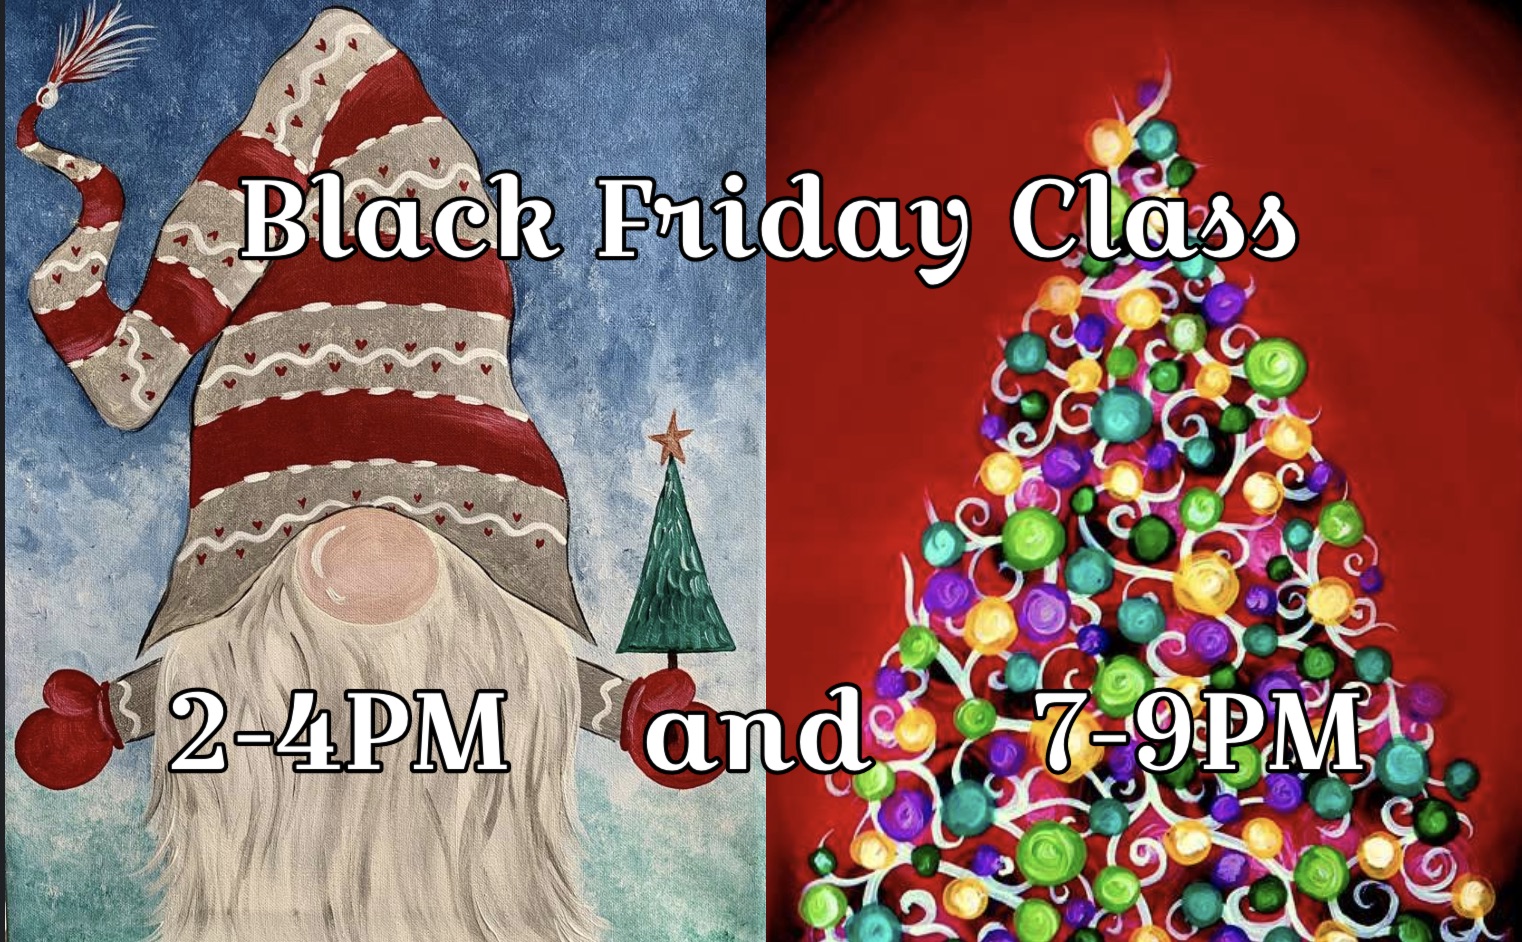 Black Friday Classes and Deals!